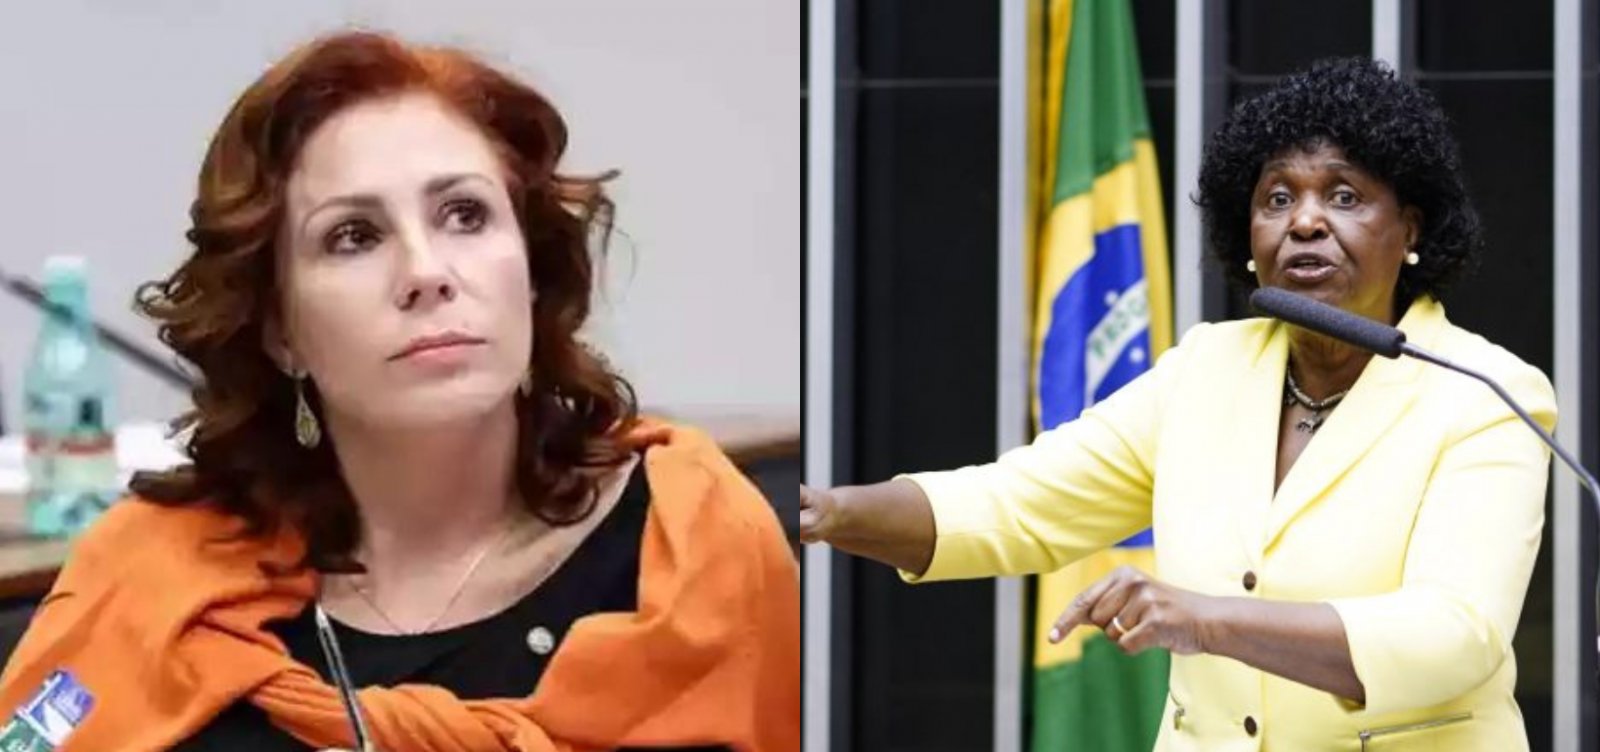 Deputada Carla Zambelli causa polêmica ao chamar Benedita da Silva de "Chica da Silva"